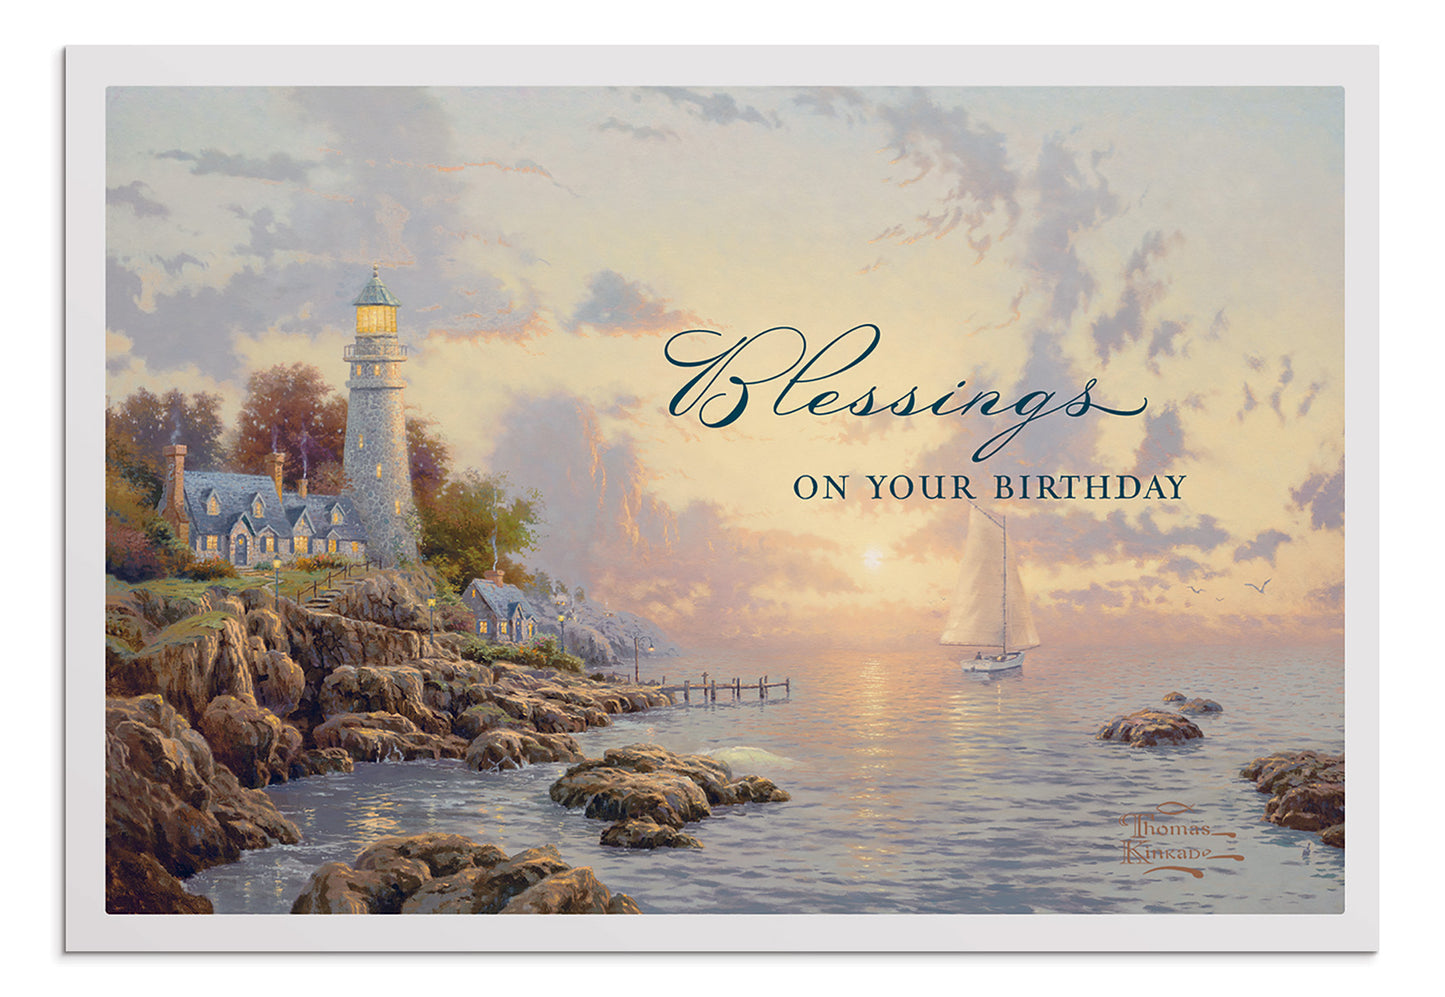 Thomas Kinkade - Birthday - For You - 12 Boxed Cards, KJV - The Christian Gift Company